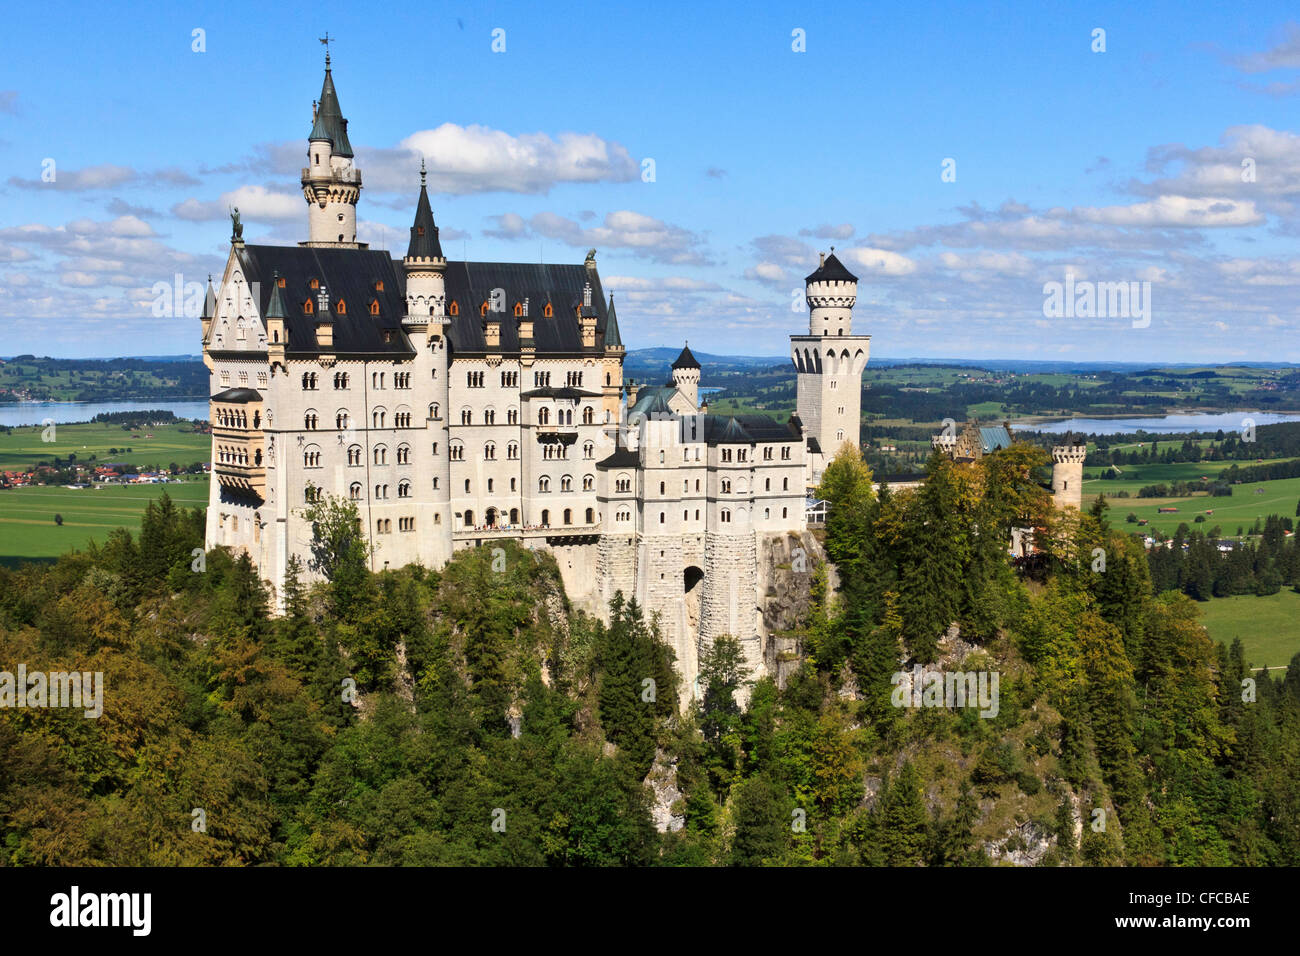 Germany, Ludwig II, Bavaria, Neuschwanstein, castle, Romanesque, Revival palace, Schwangau, Bavaria Stock Photo